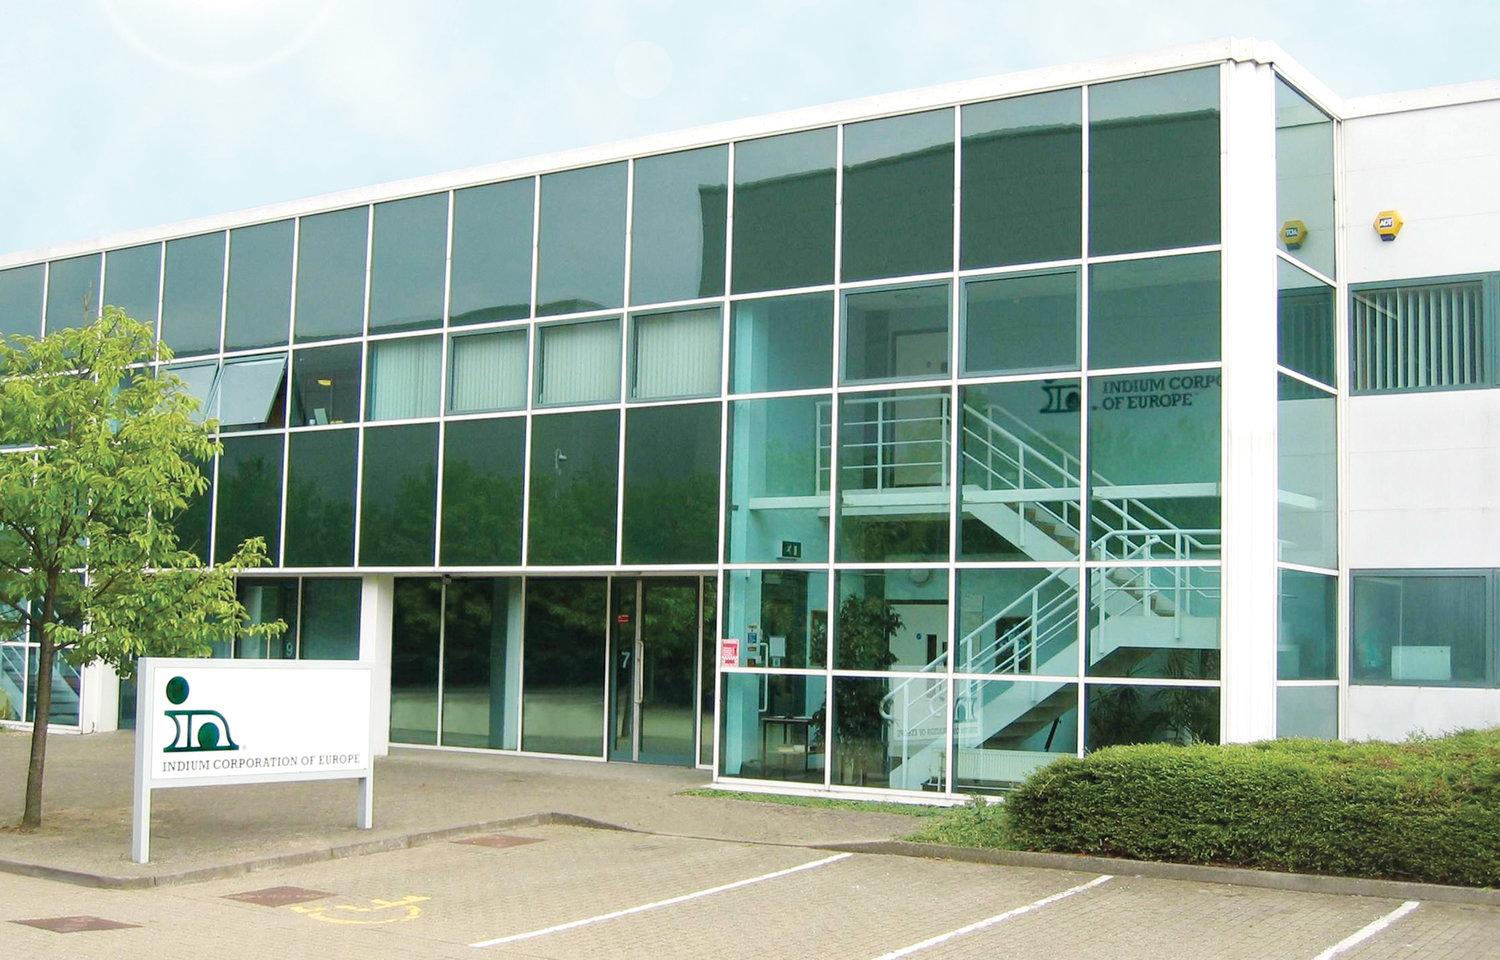 Indium Corporation’s European headquarters in Milton Keynes, England.